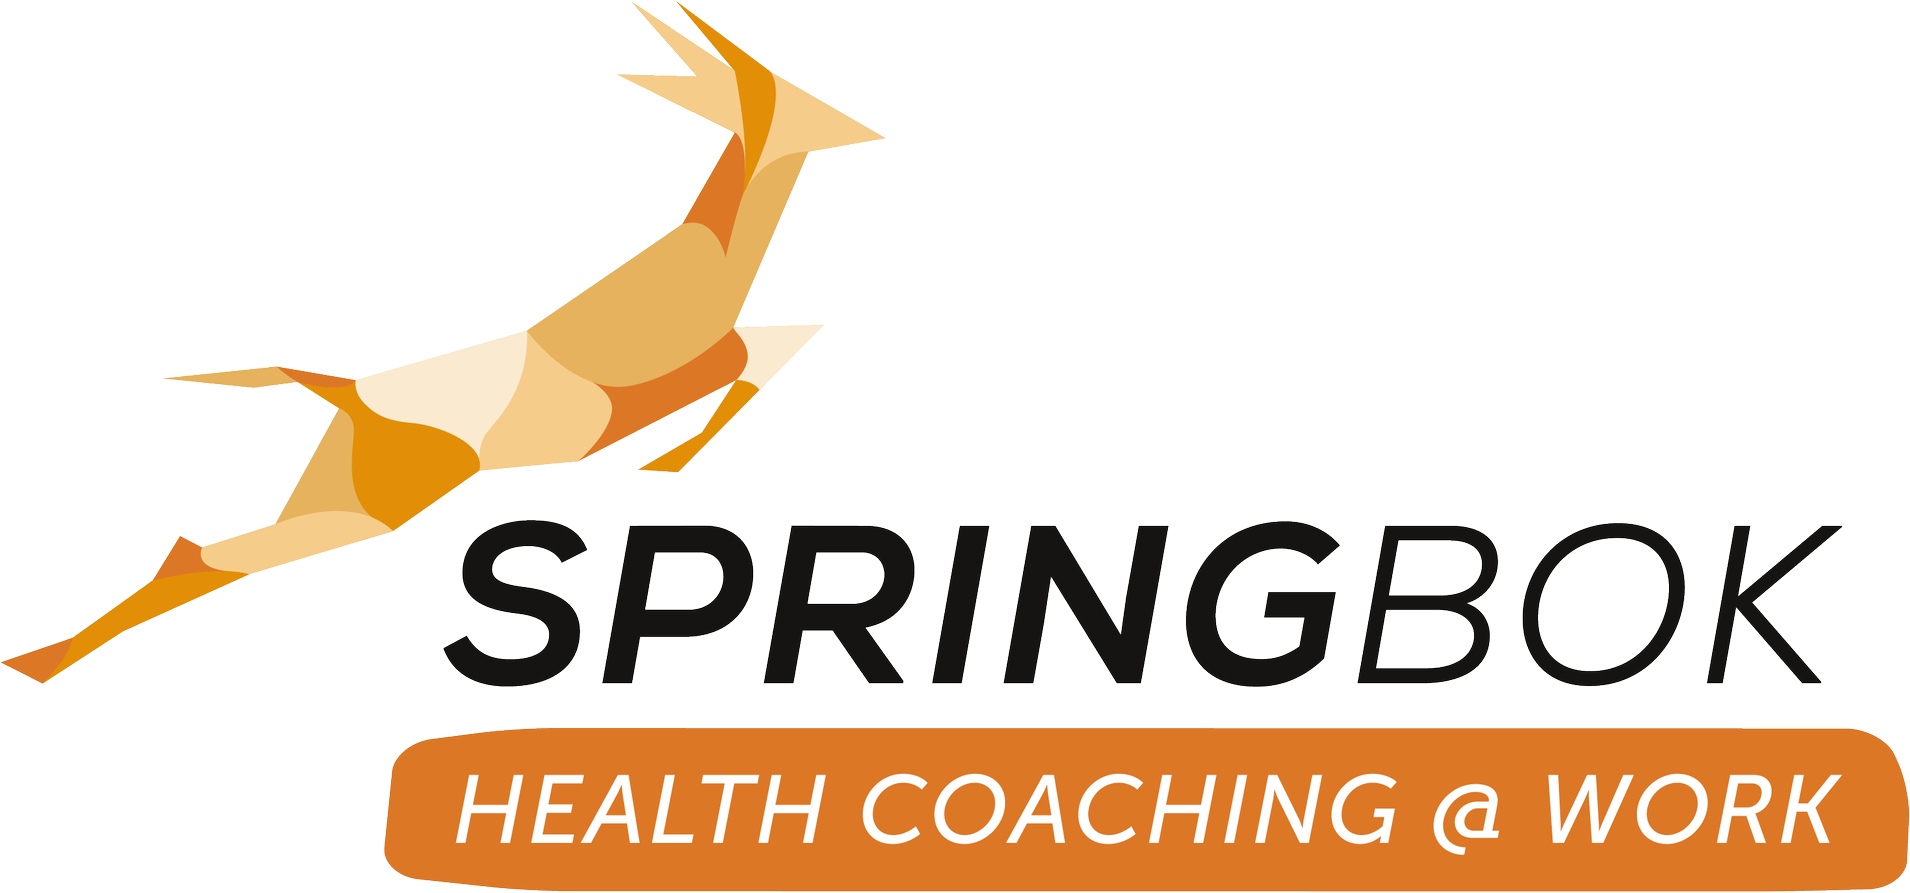 Springbok Coaching